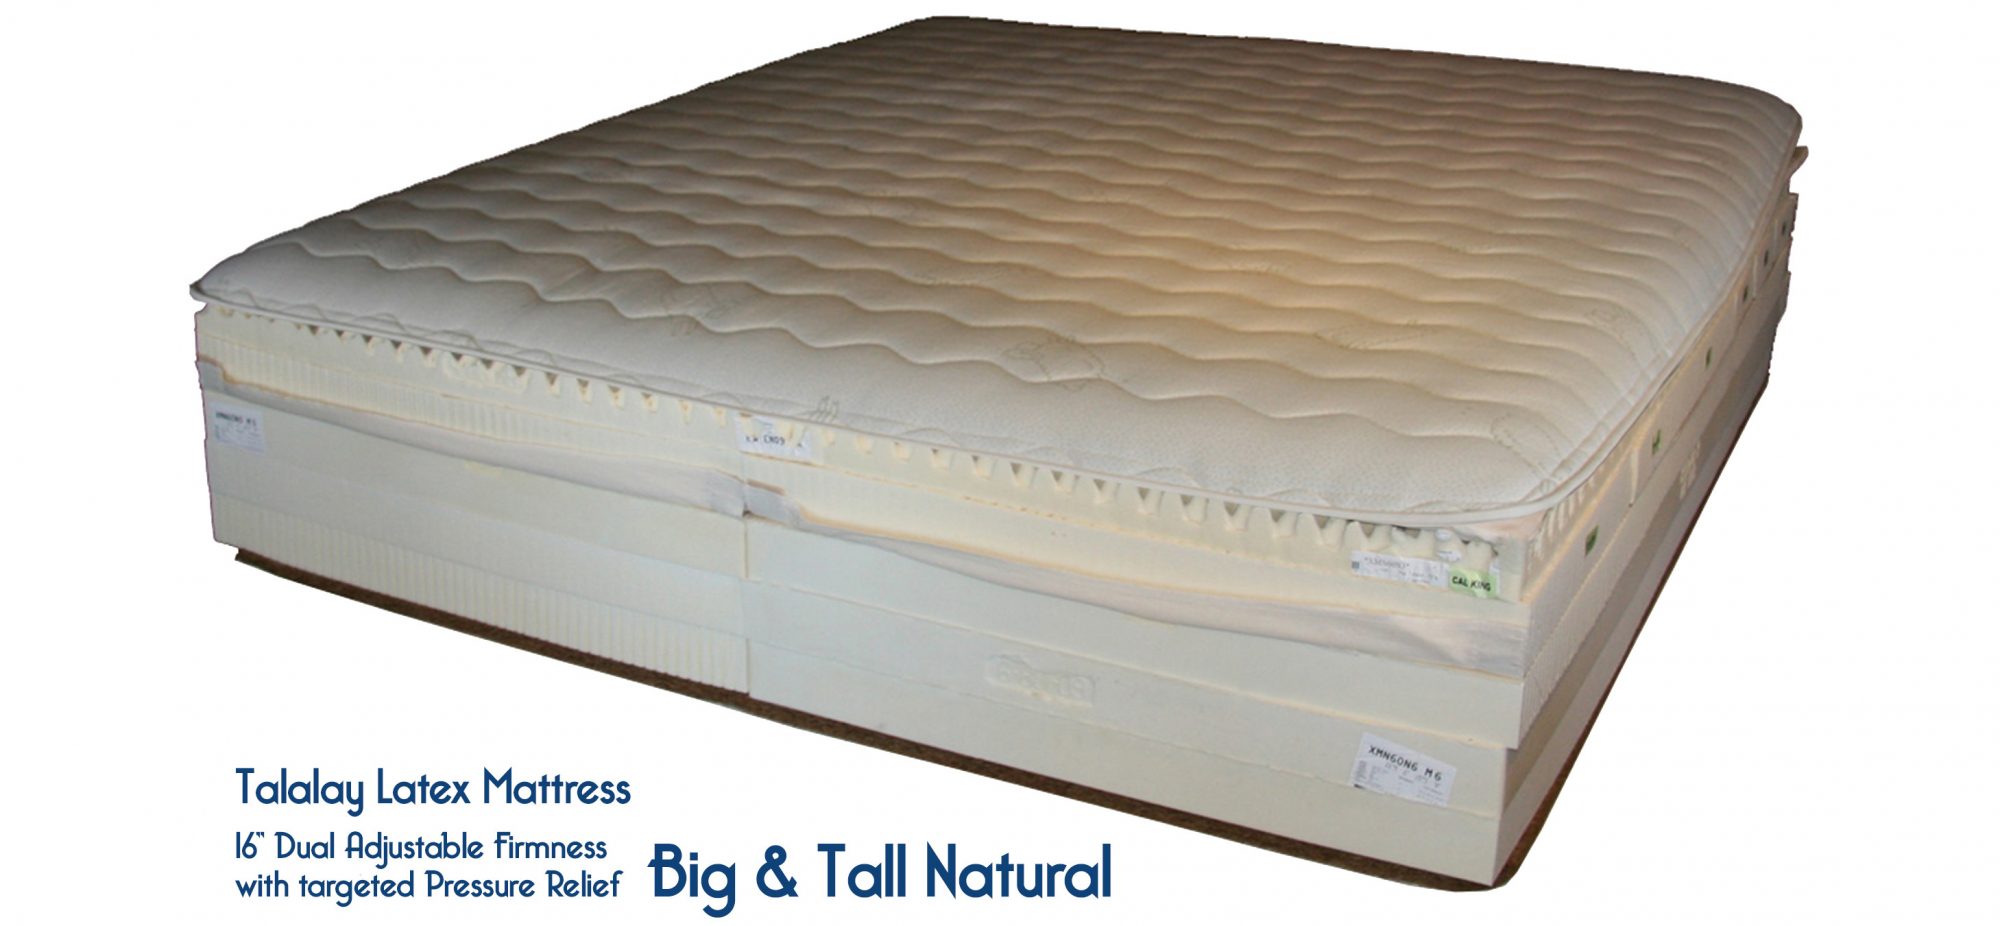 12 inch tall mattress cover